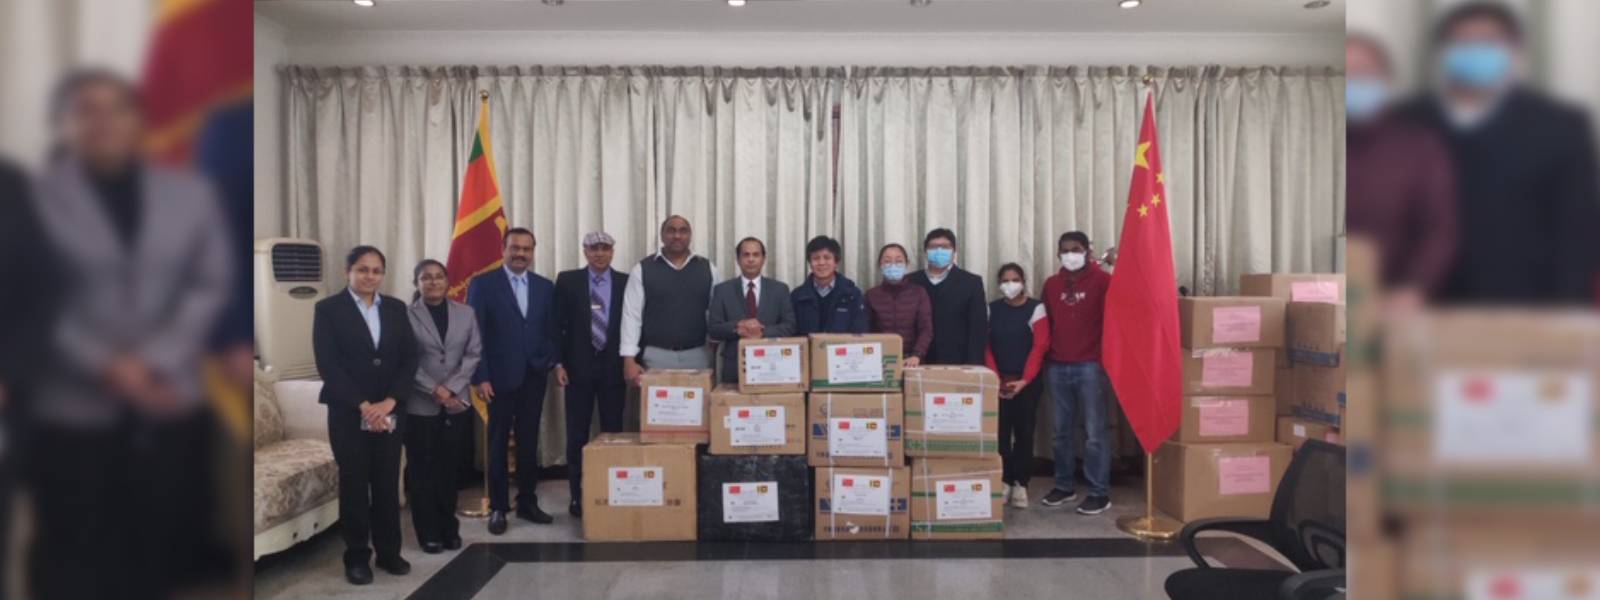 Sri Lankan community in China donates medical supplies